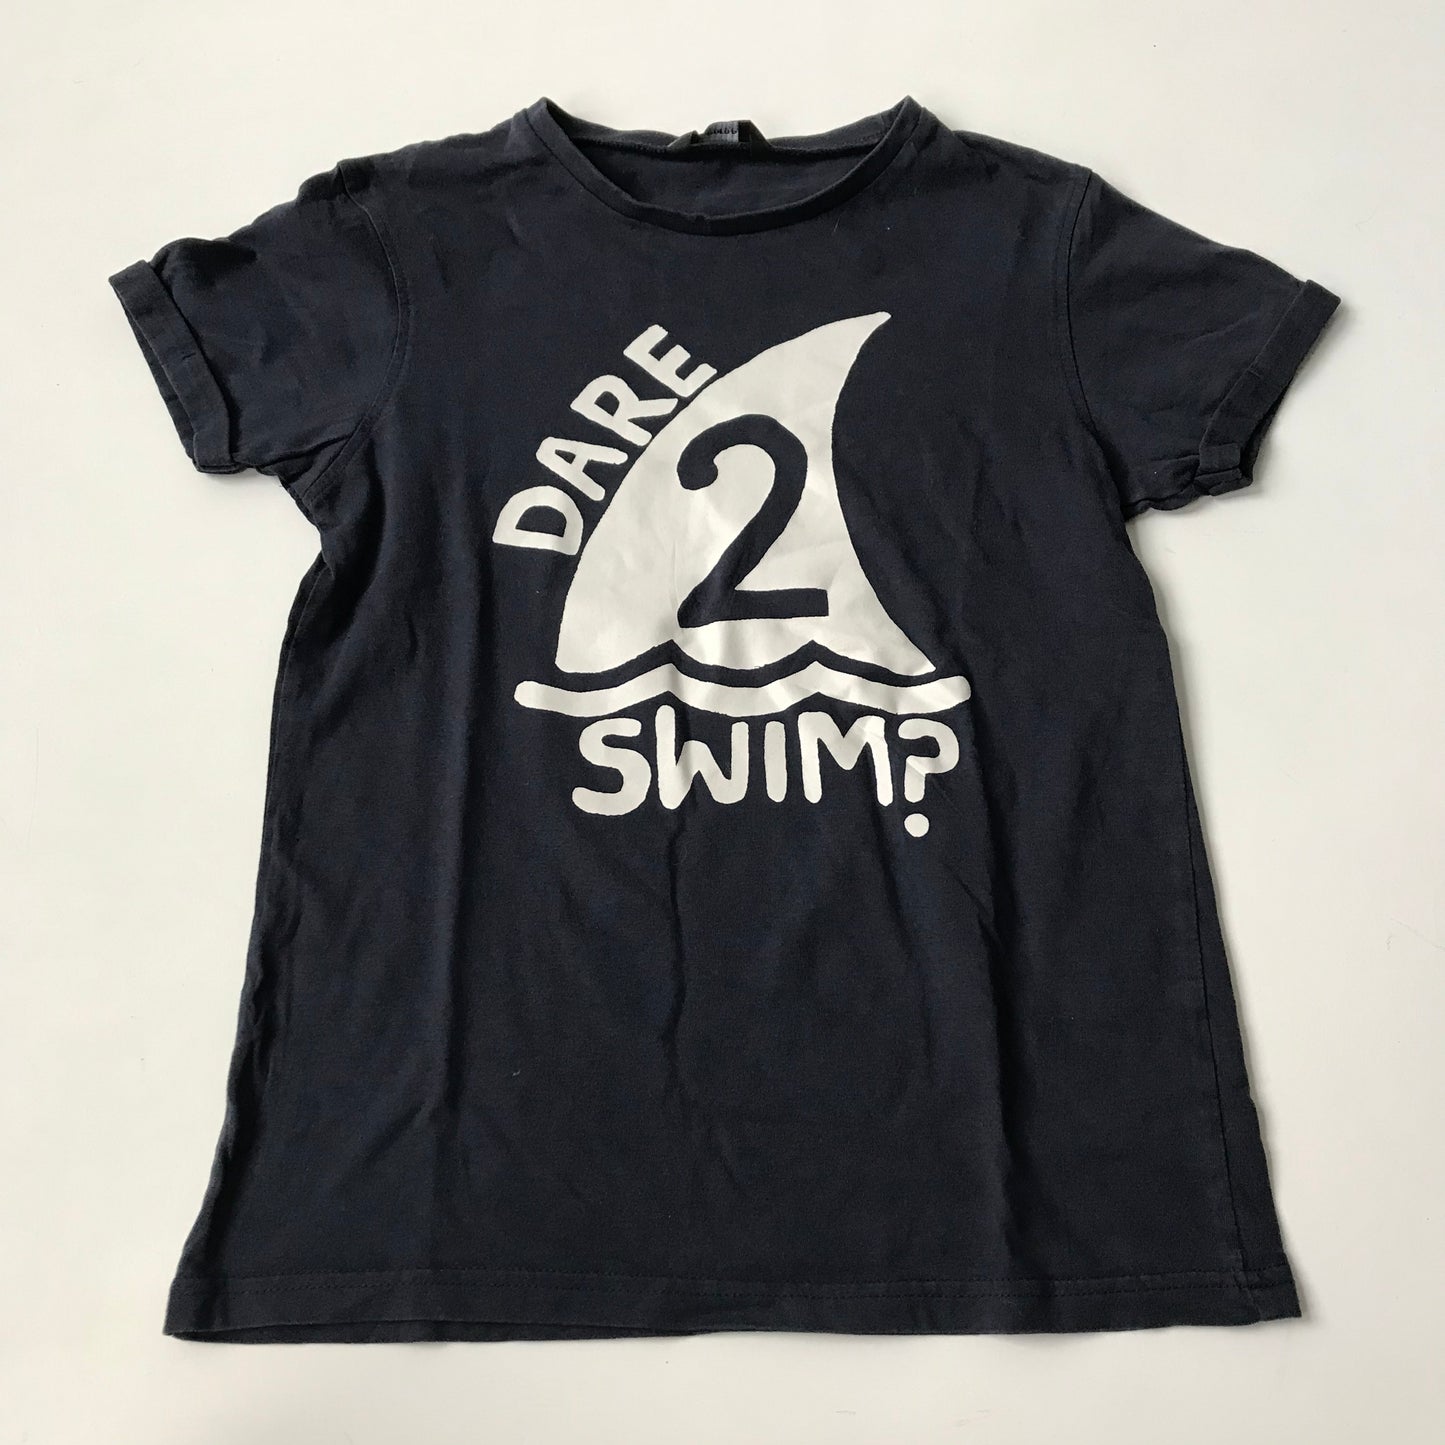 T-shirt - 'Dare To Swim?' - Age 10